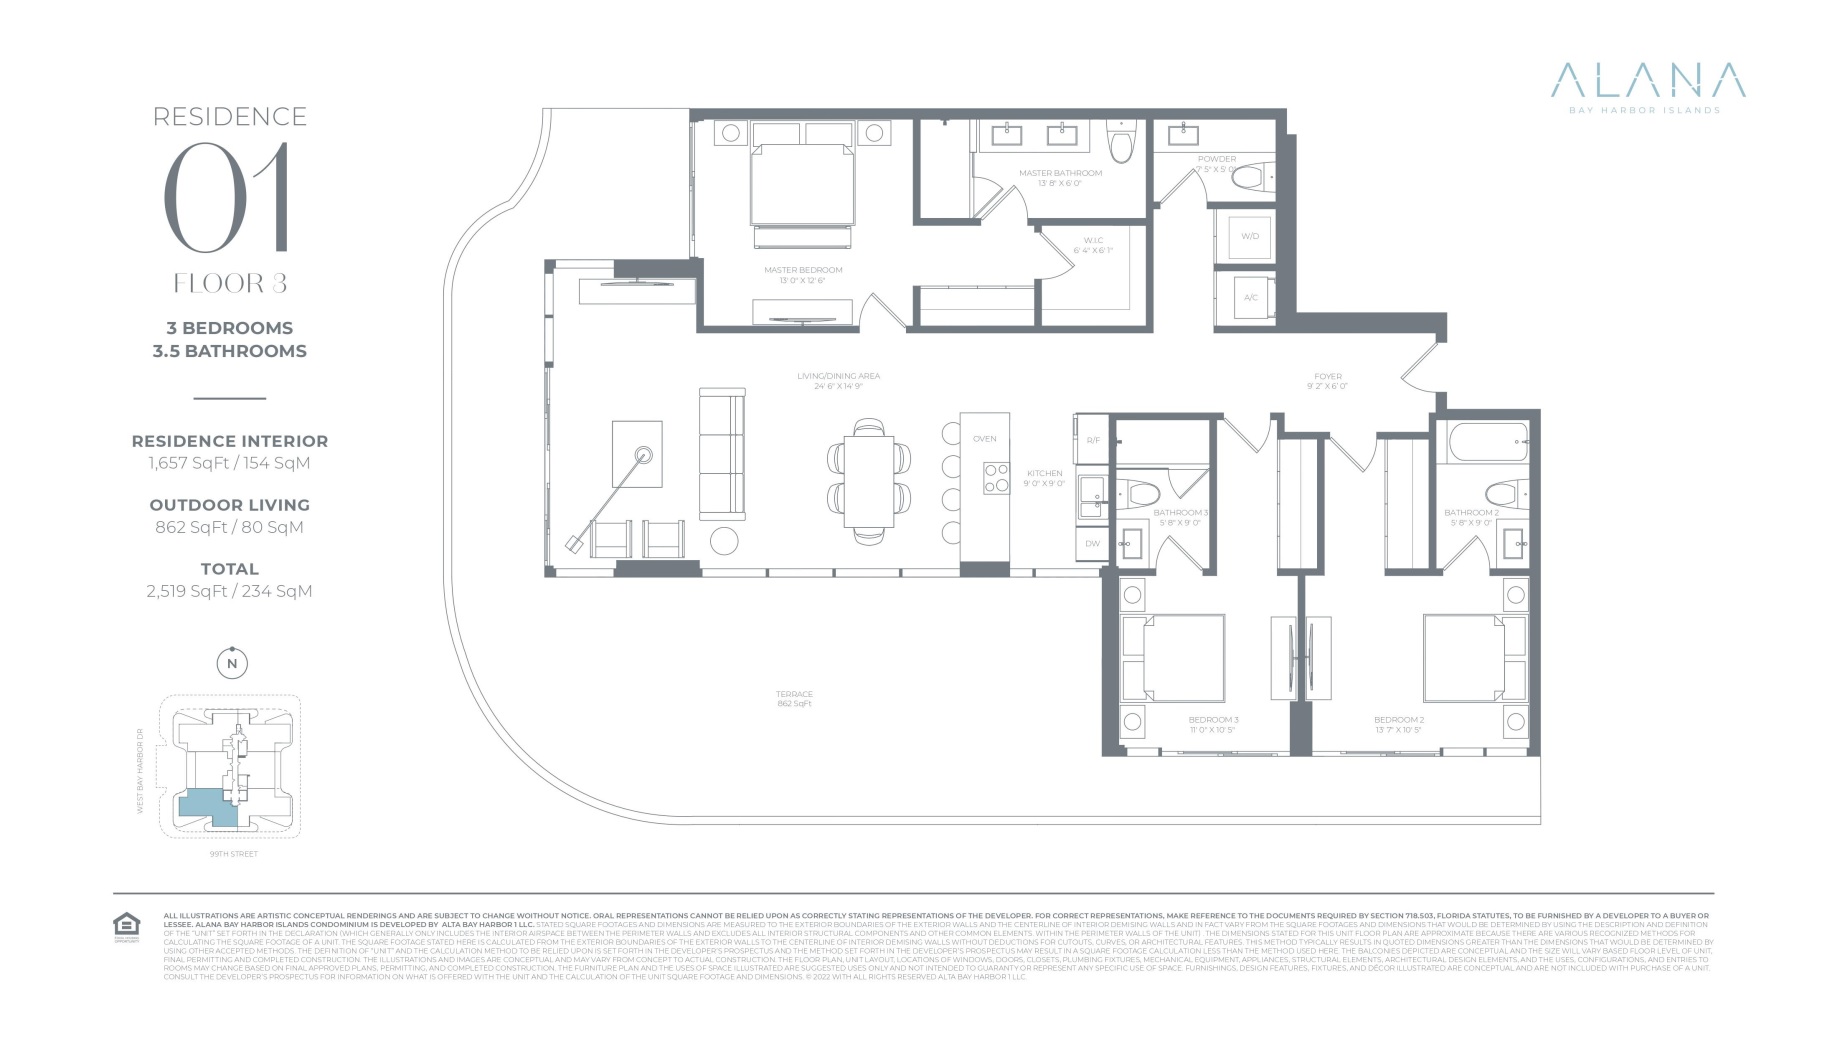 Alana_Floorplan_Residence01_floor3_3bed_3.5bath